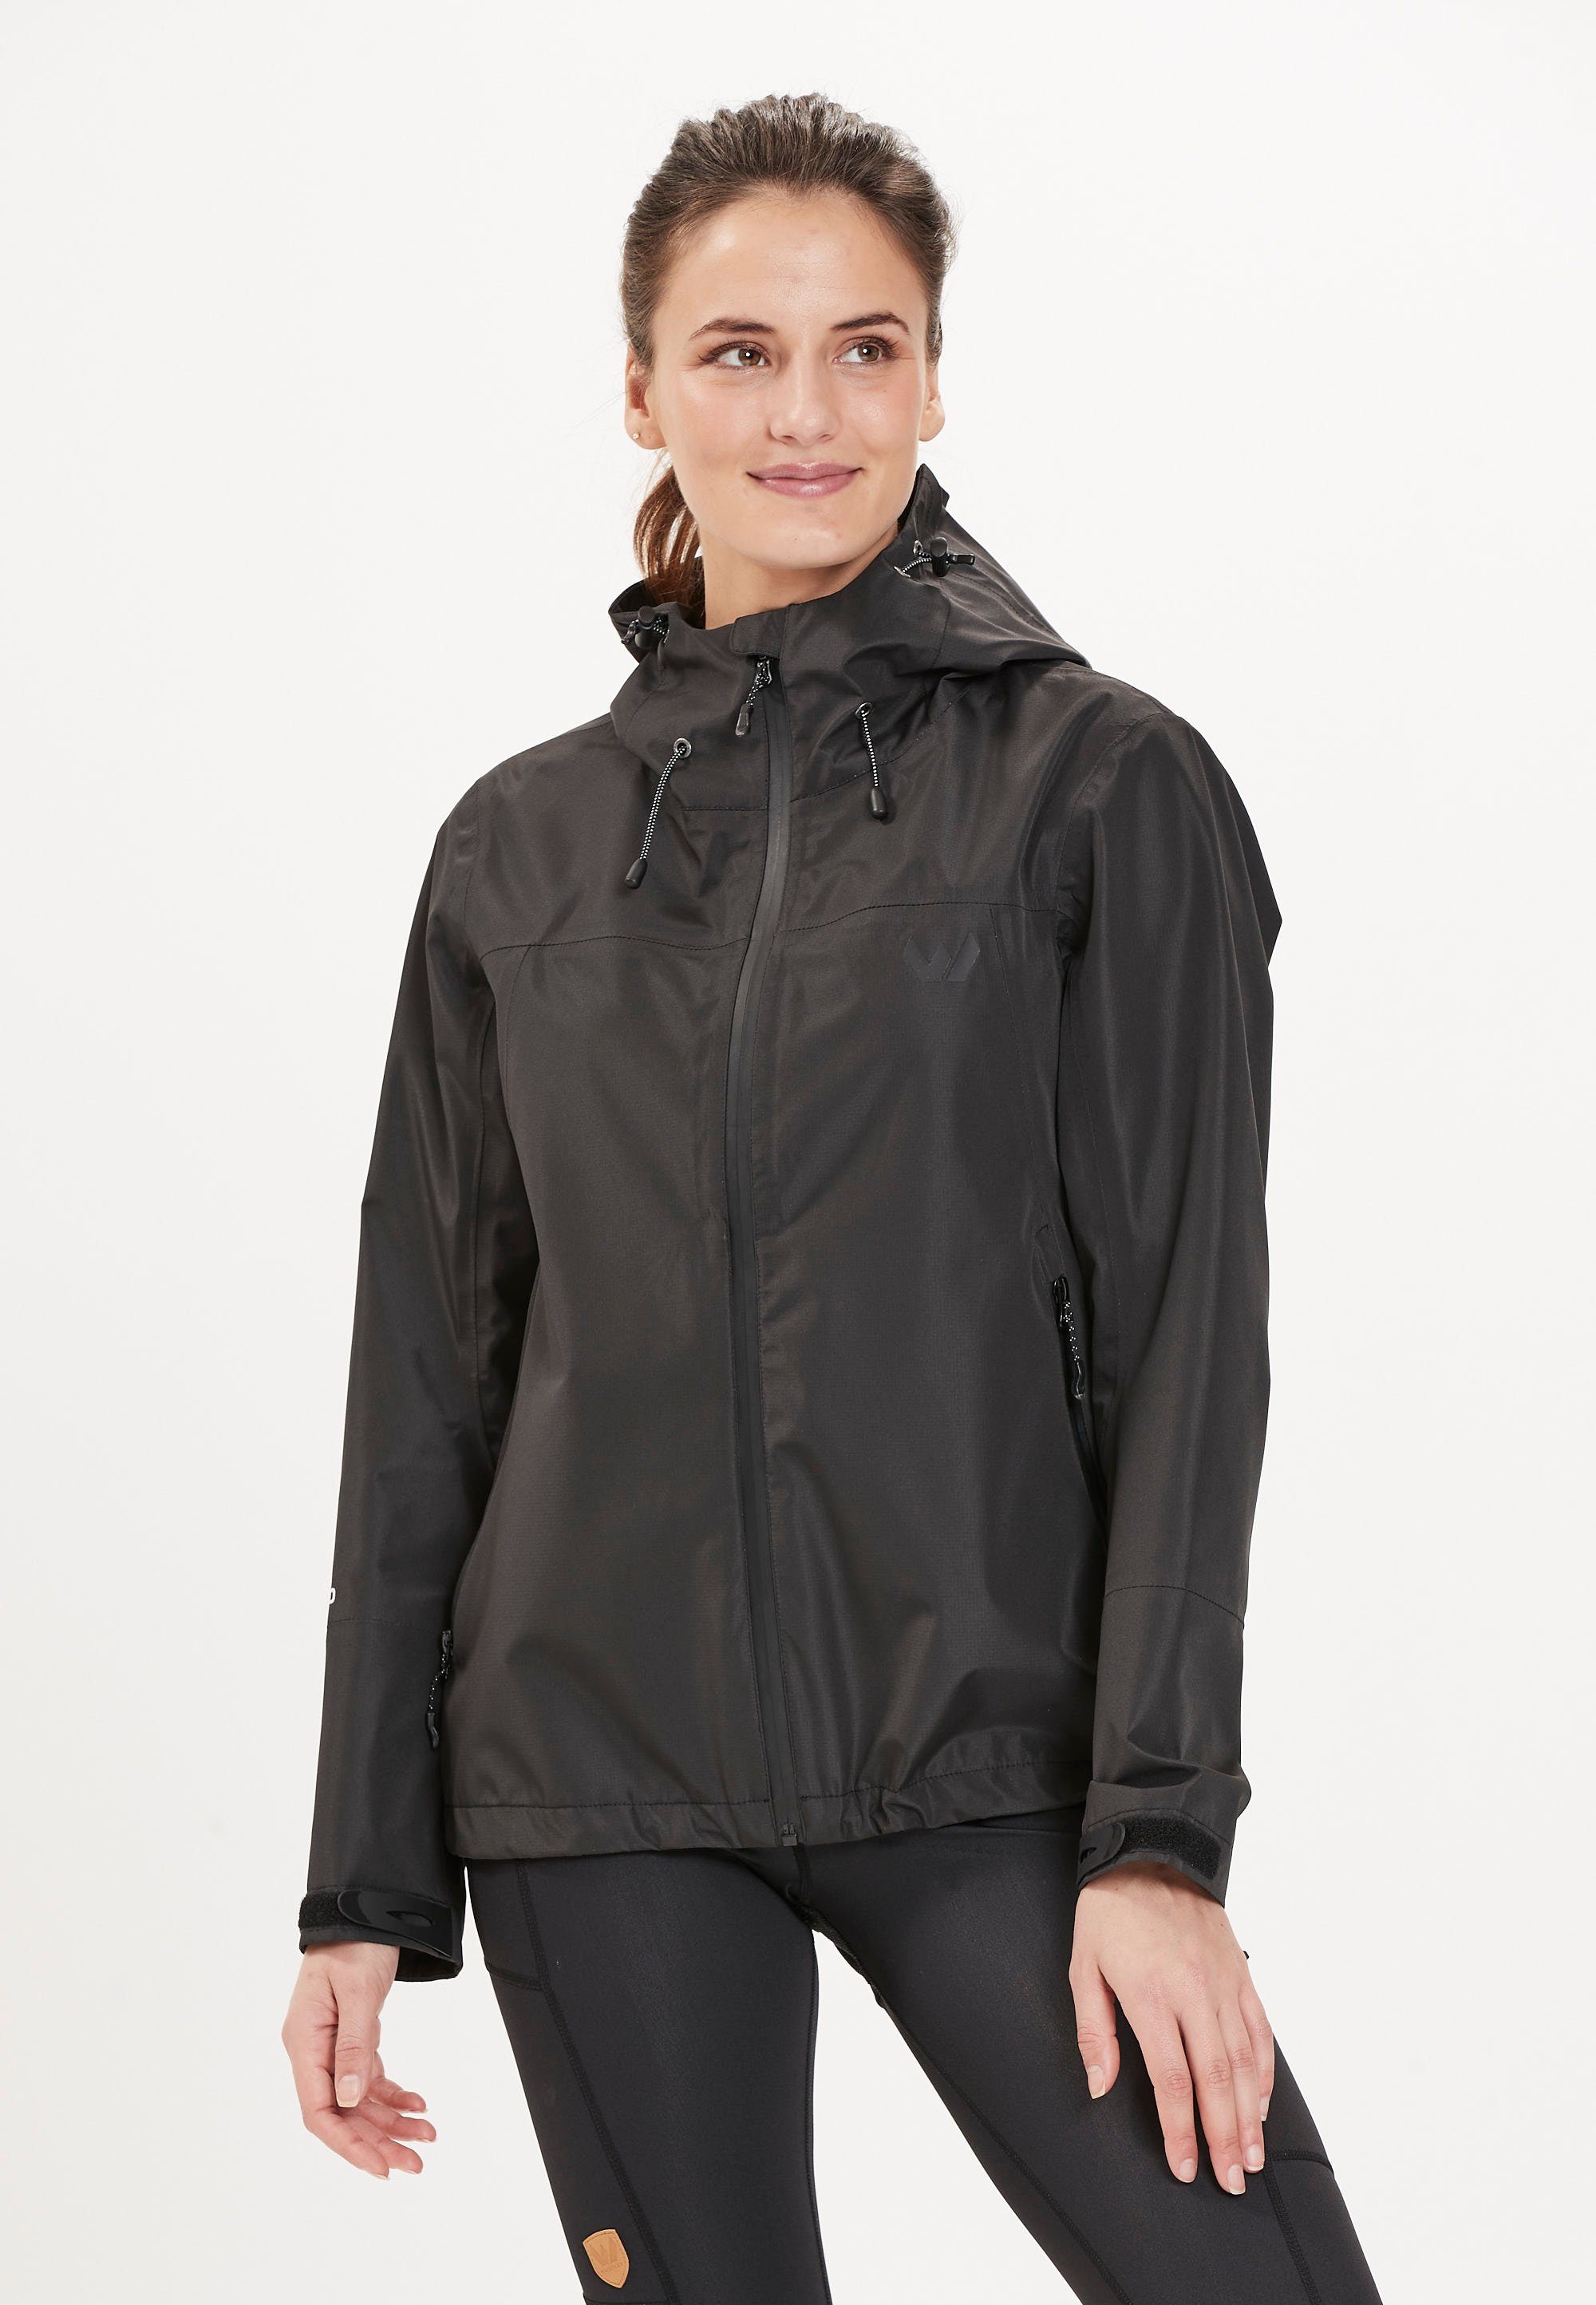 WHISTLER Softshelljacke BROOK Kapuze praktischer mit W 15000 Shell W-PRO Jacket schwarz